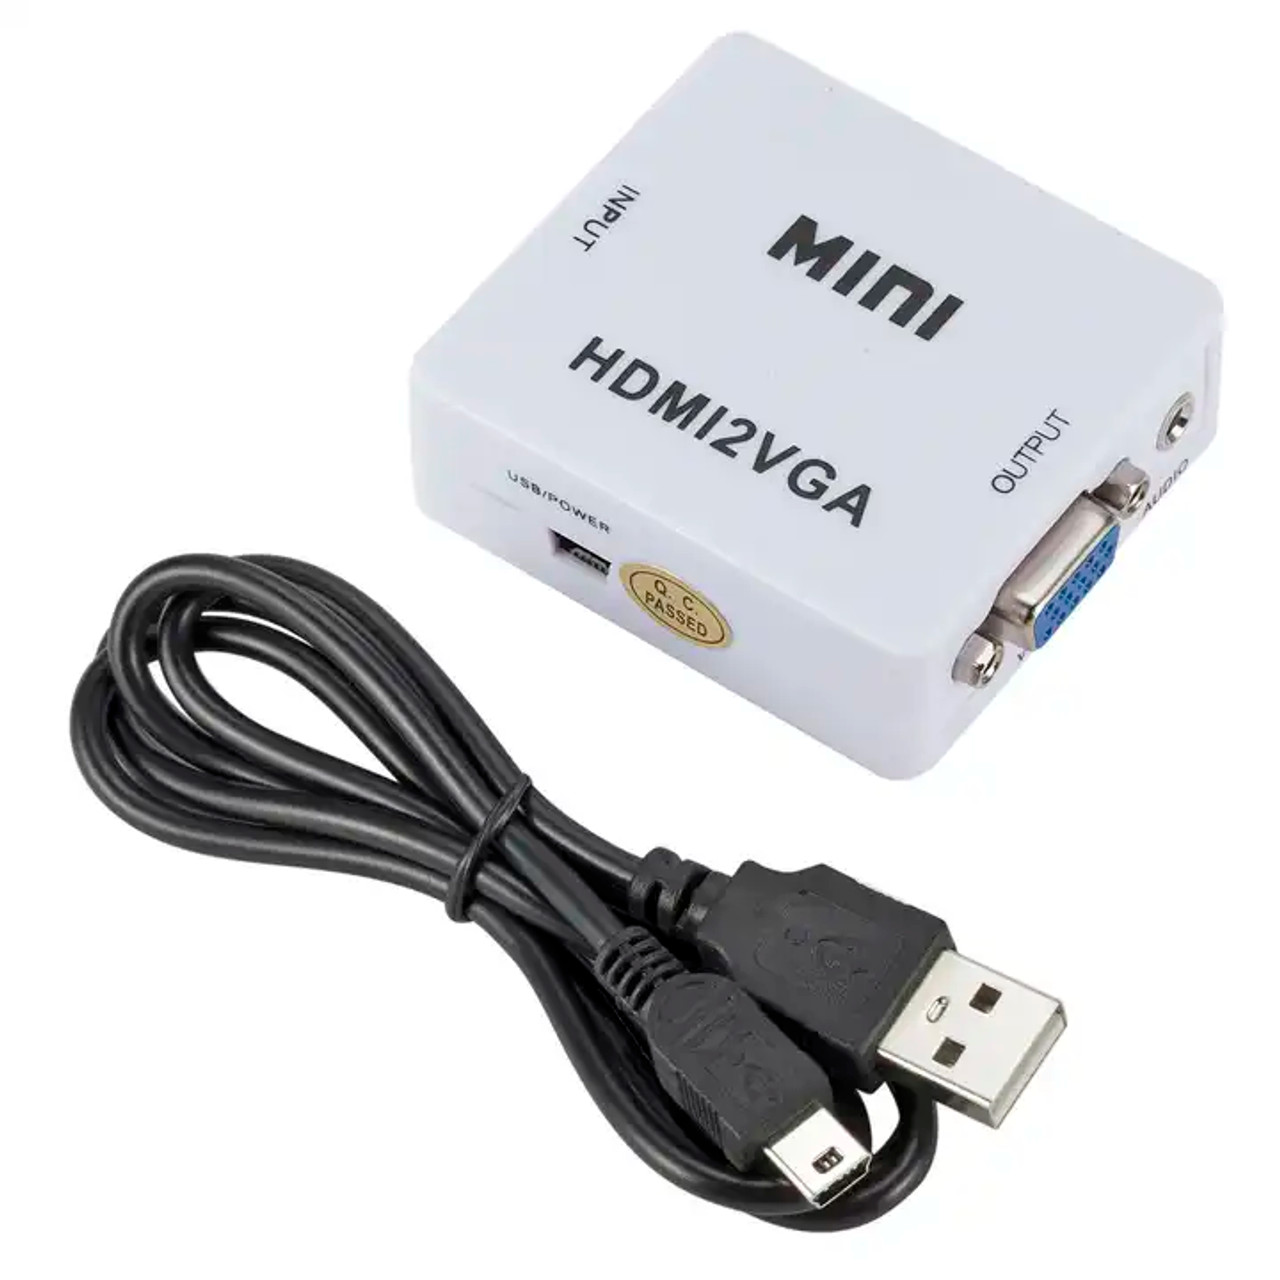 STORM Câble Convertisseur VGA vers VGA + HDMI - TecnoCity